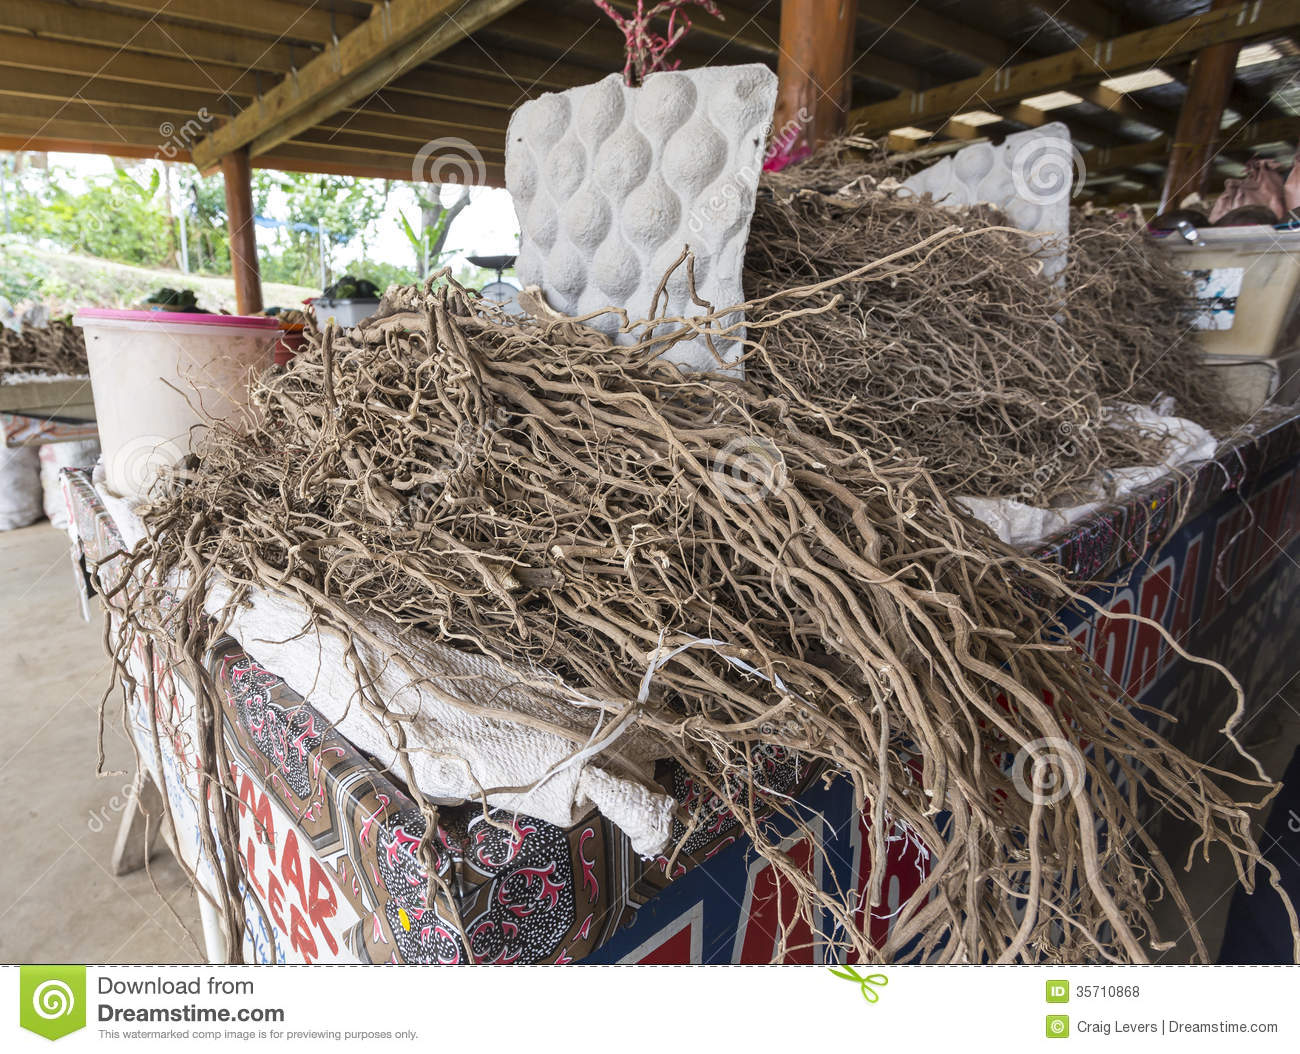 kava-root-freshly-harvested-dried-fijian-farmers-market-35710868.jpg